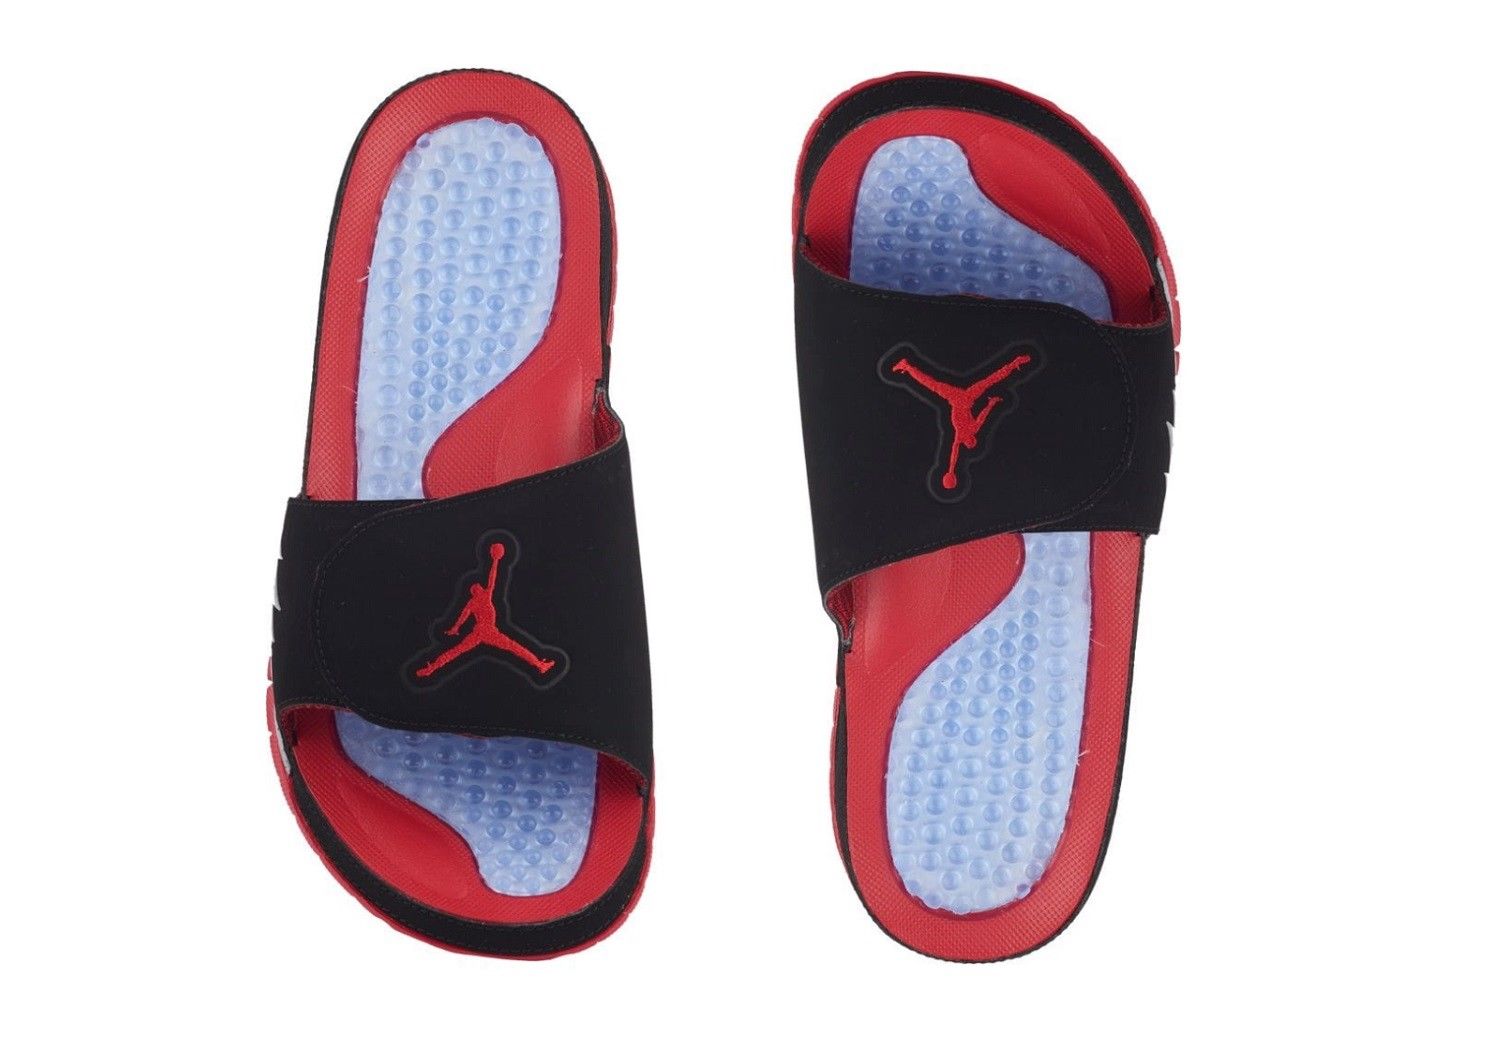 Jordan Hydro V Retro Men's Snadals Basketball Shoes #555501-060